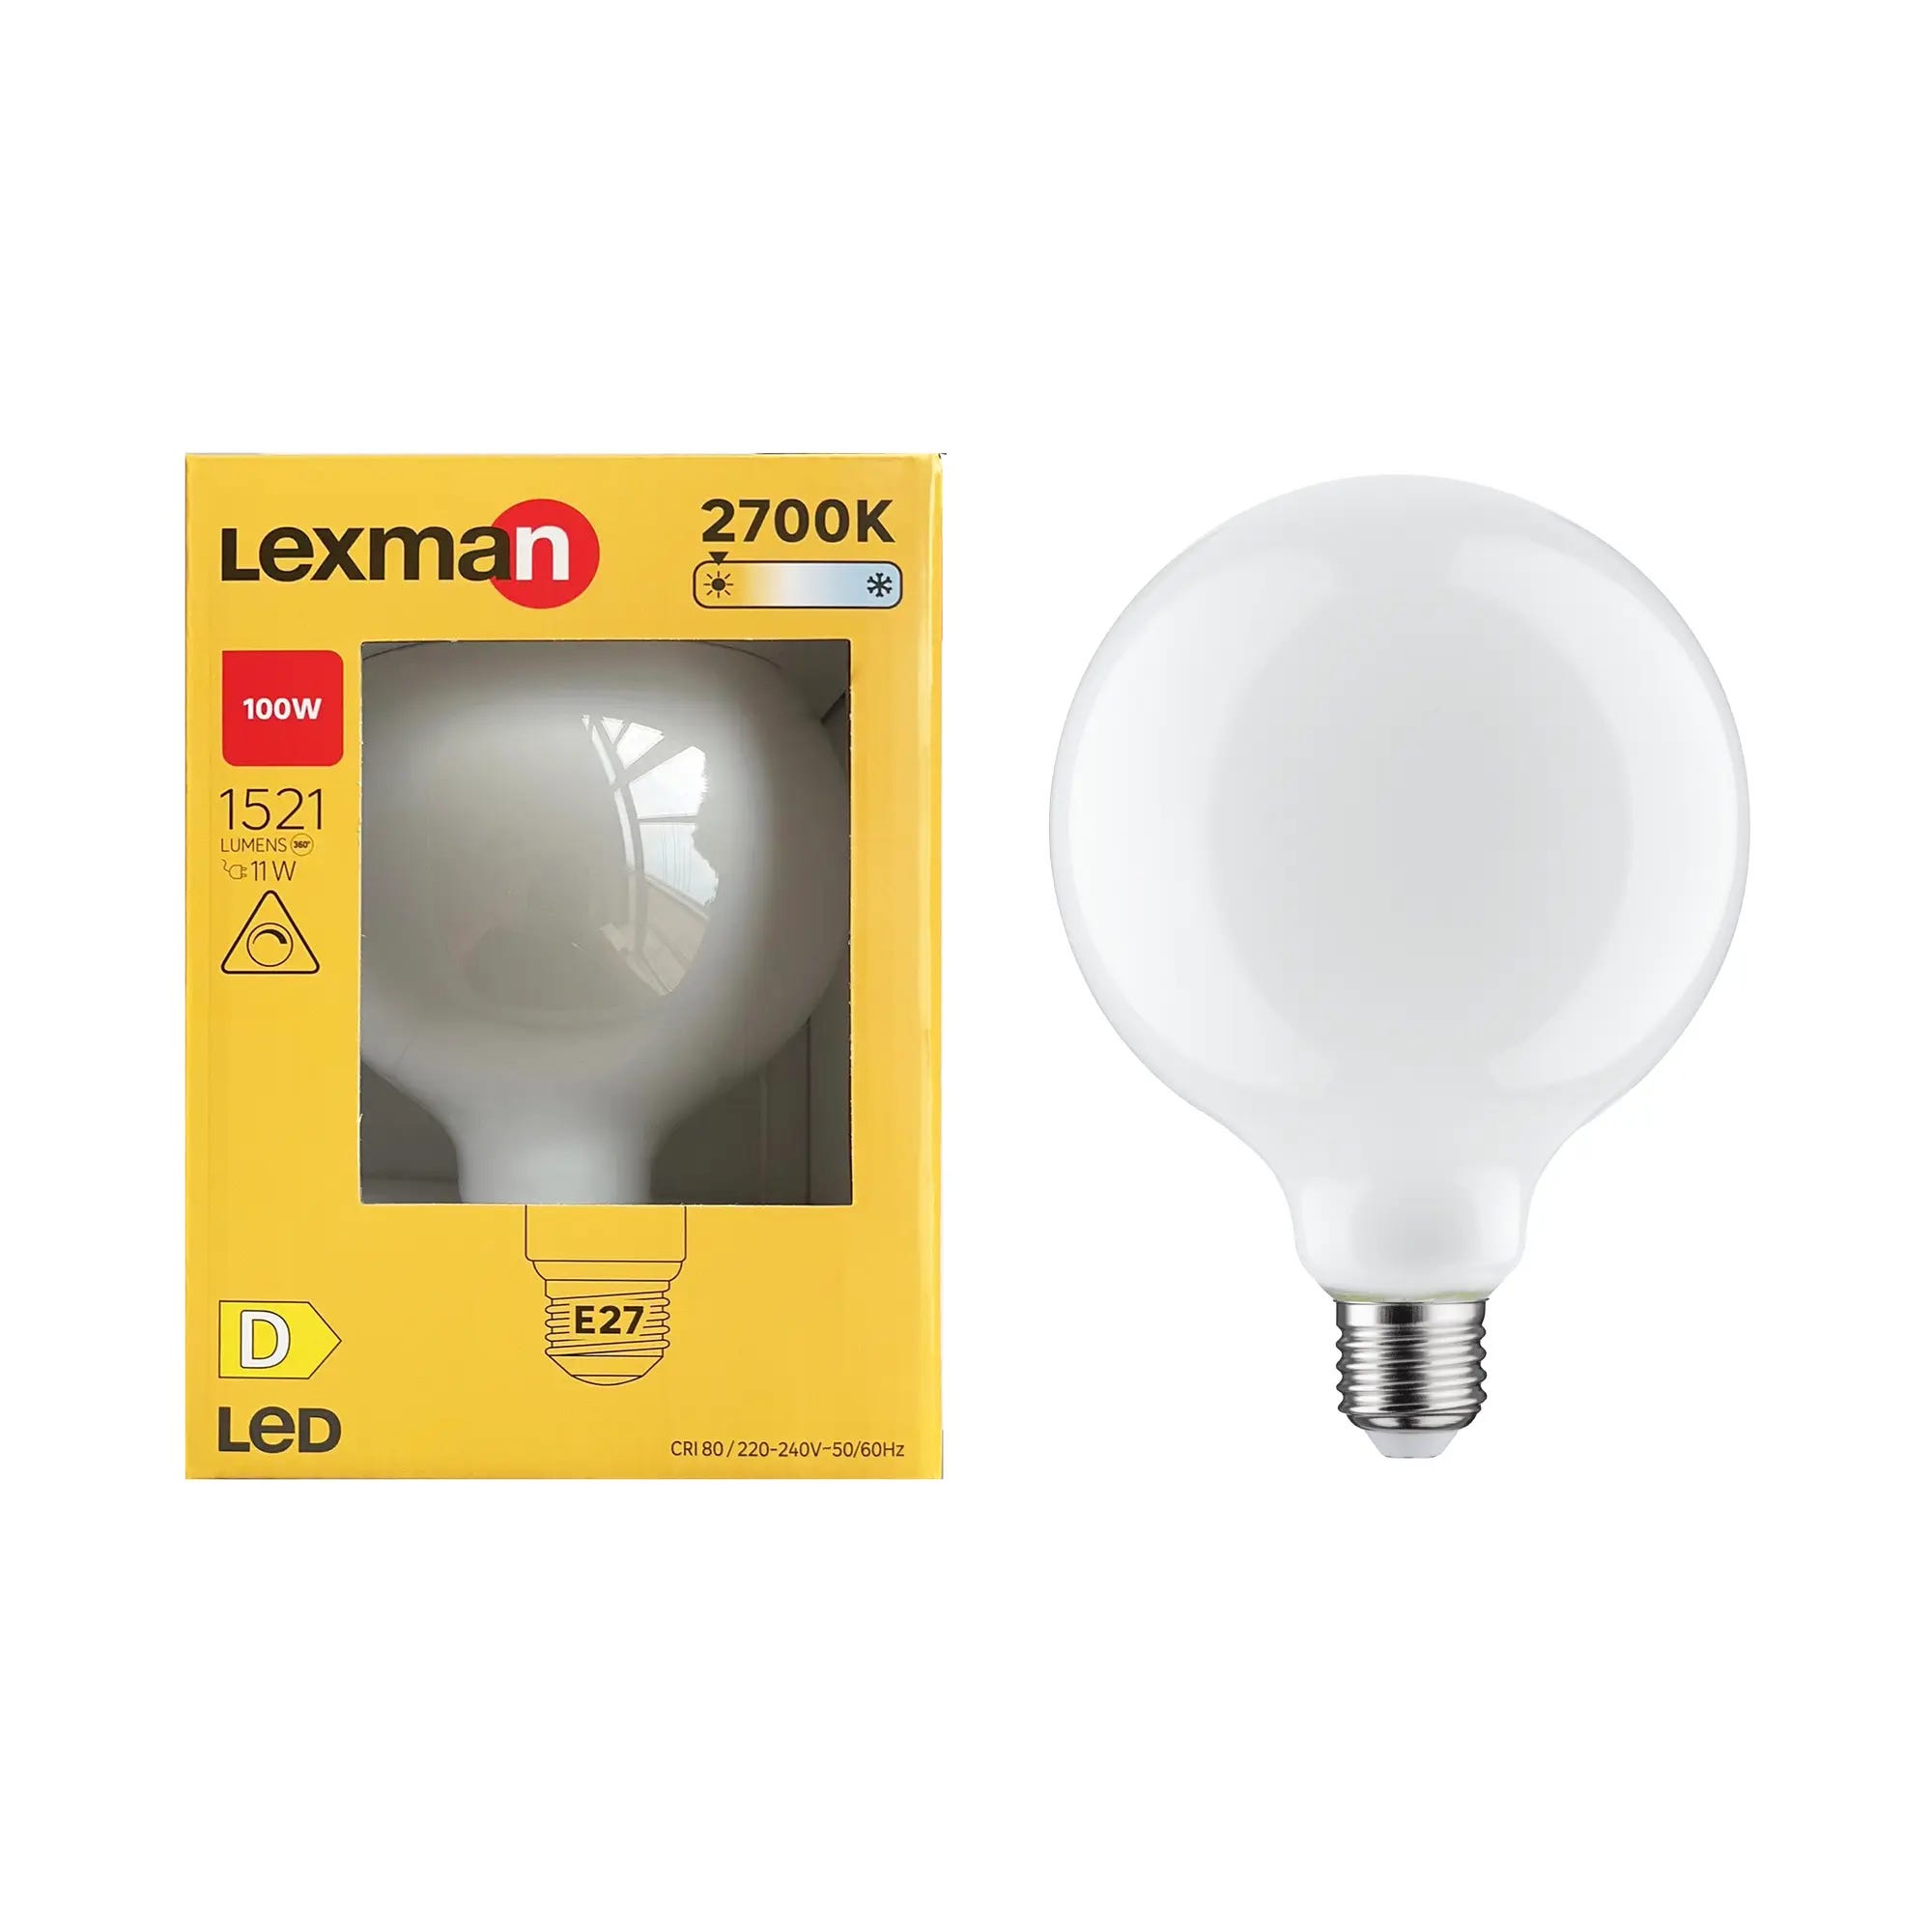 Lampadina LED, globo, opaco, luce calda, 11W=1521LM (equiv 100 W), 330°  dimmerabile, LEXMAN